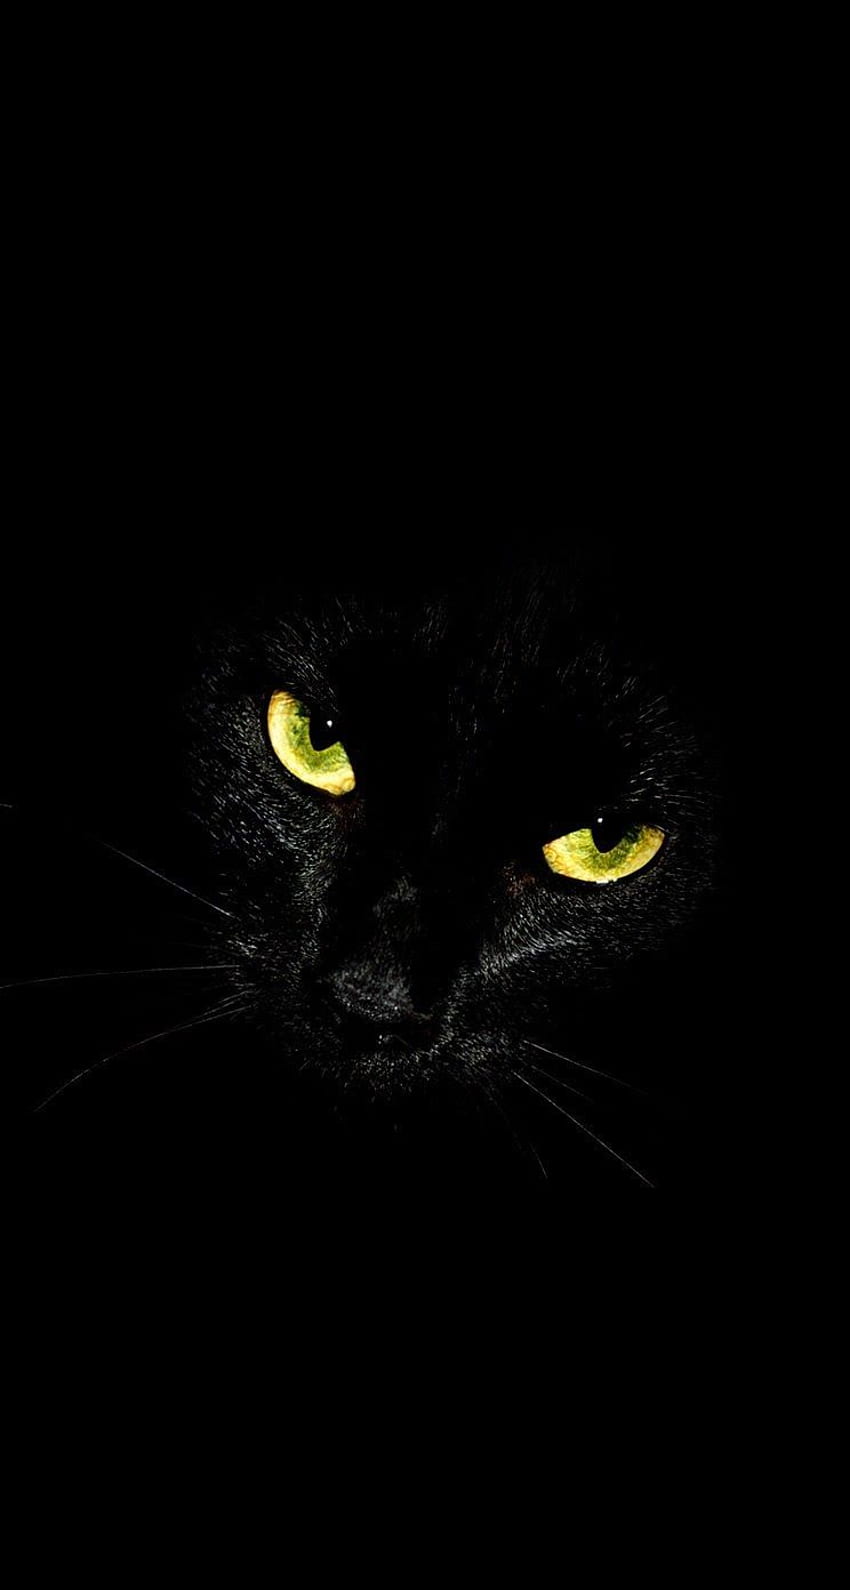 Salem the Black Cat HD wallpaper